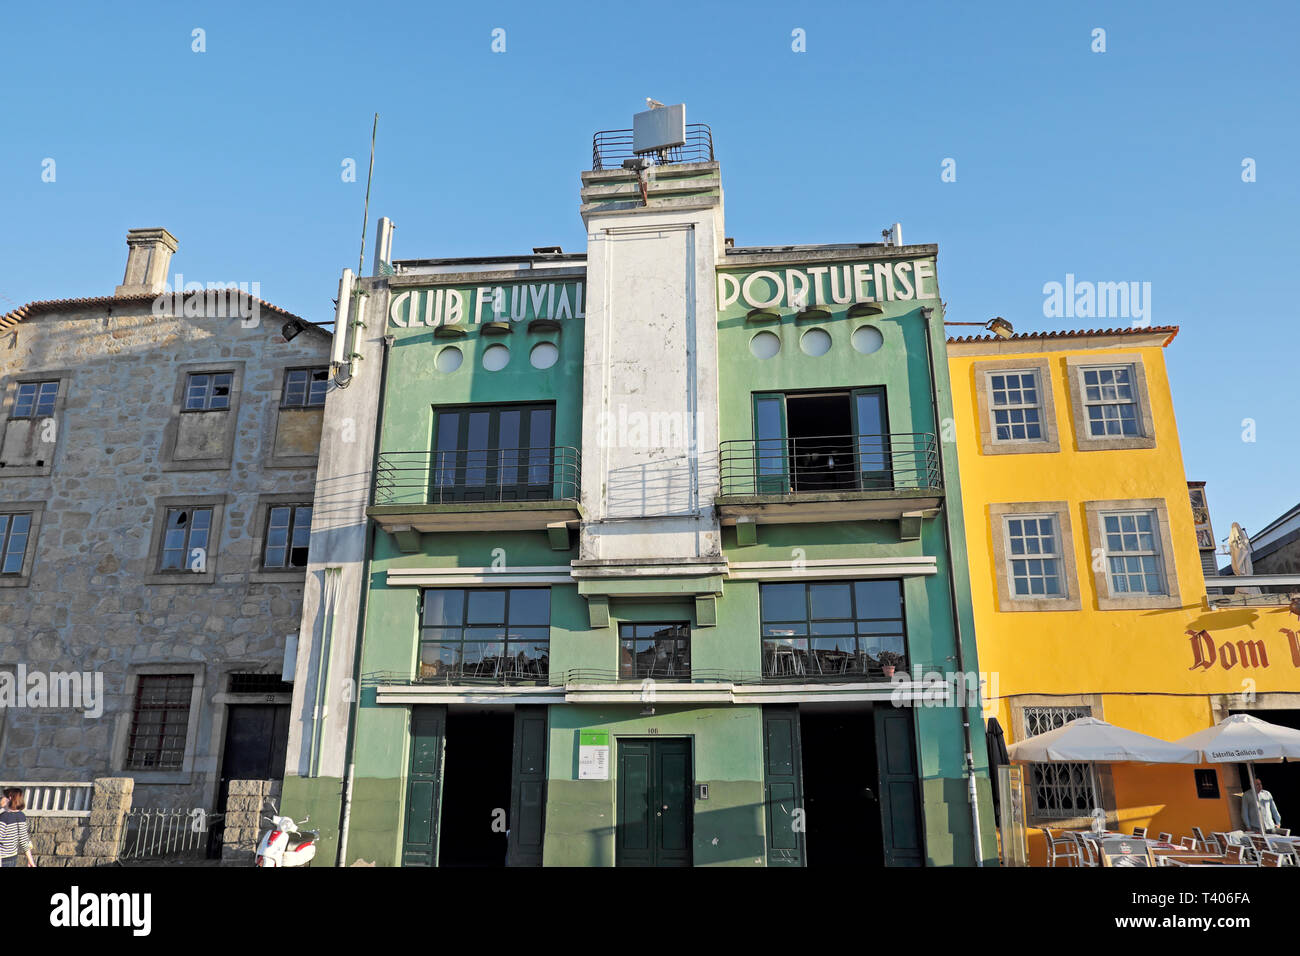 Club Fluvial Portuense building facade on Cais de Gaia, Vila Nova de Gaia in Porto, Portugal Europe EU  KATHY DEWITT Stock Photo